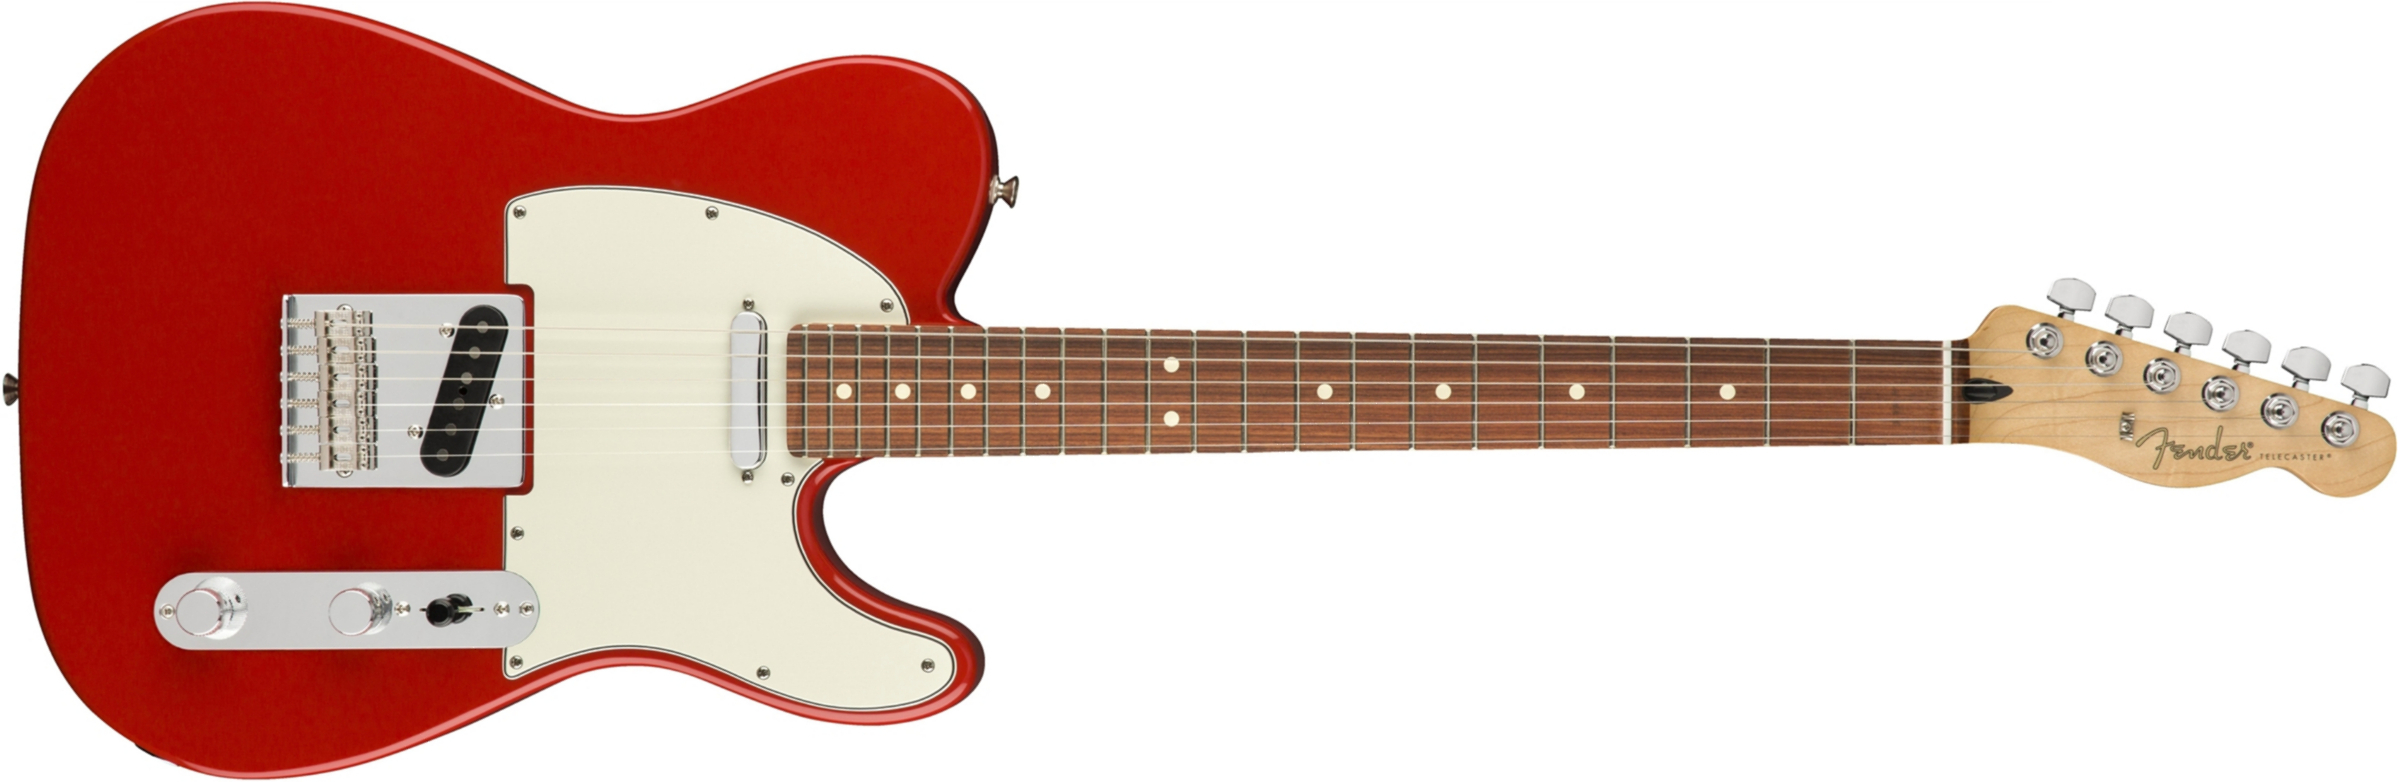 Fender Tele Player Mex Ss Pf - Sonic Red - Guitarra eléctrica con forma de tel - Main picture